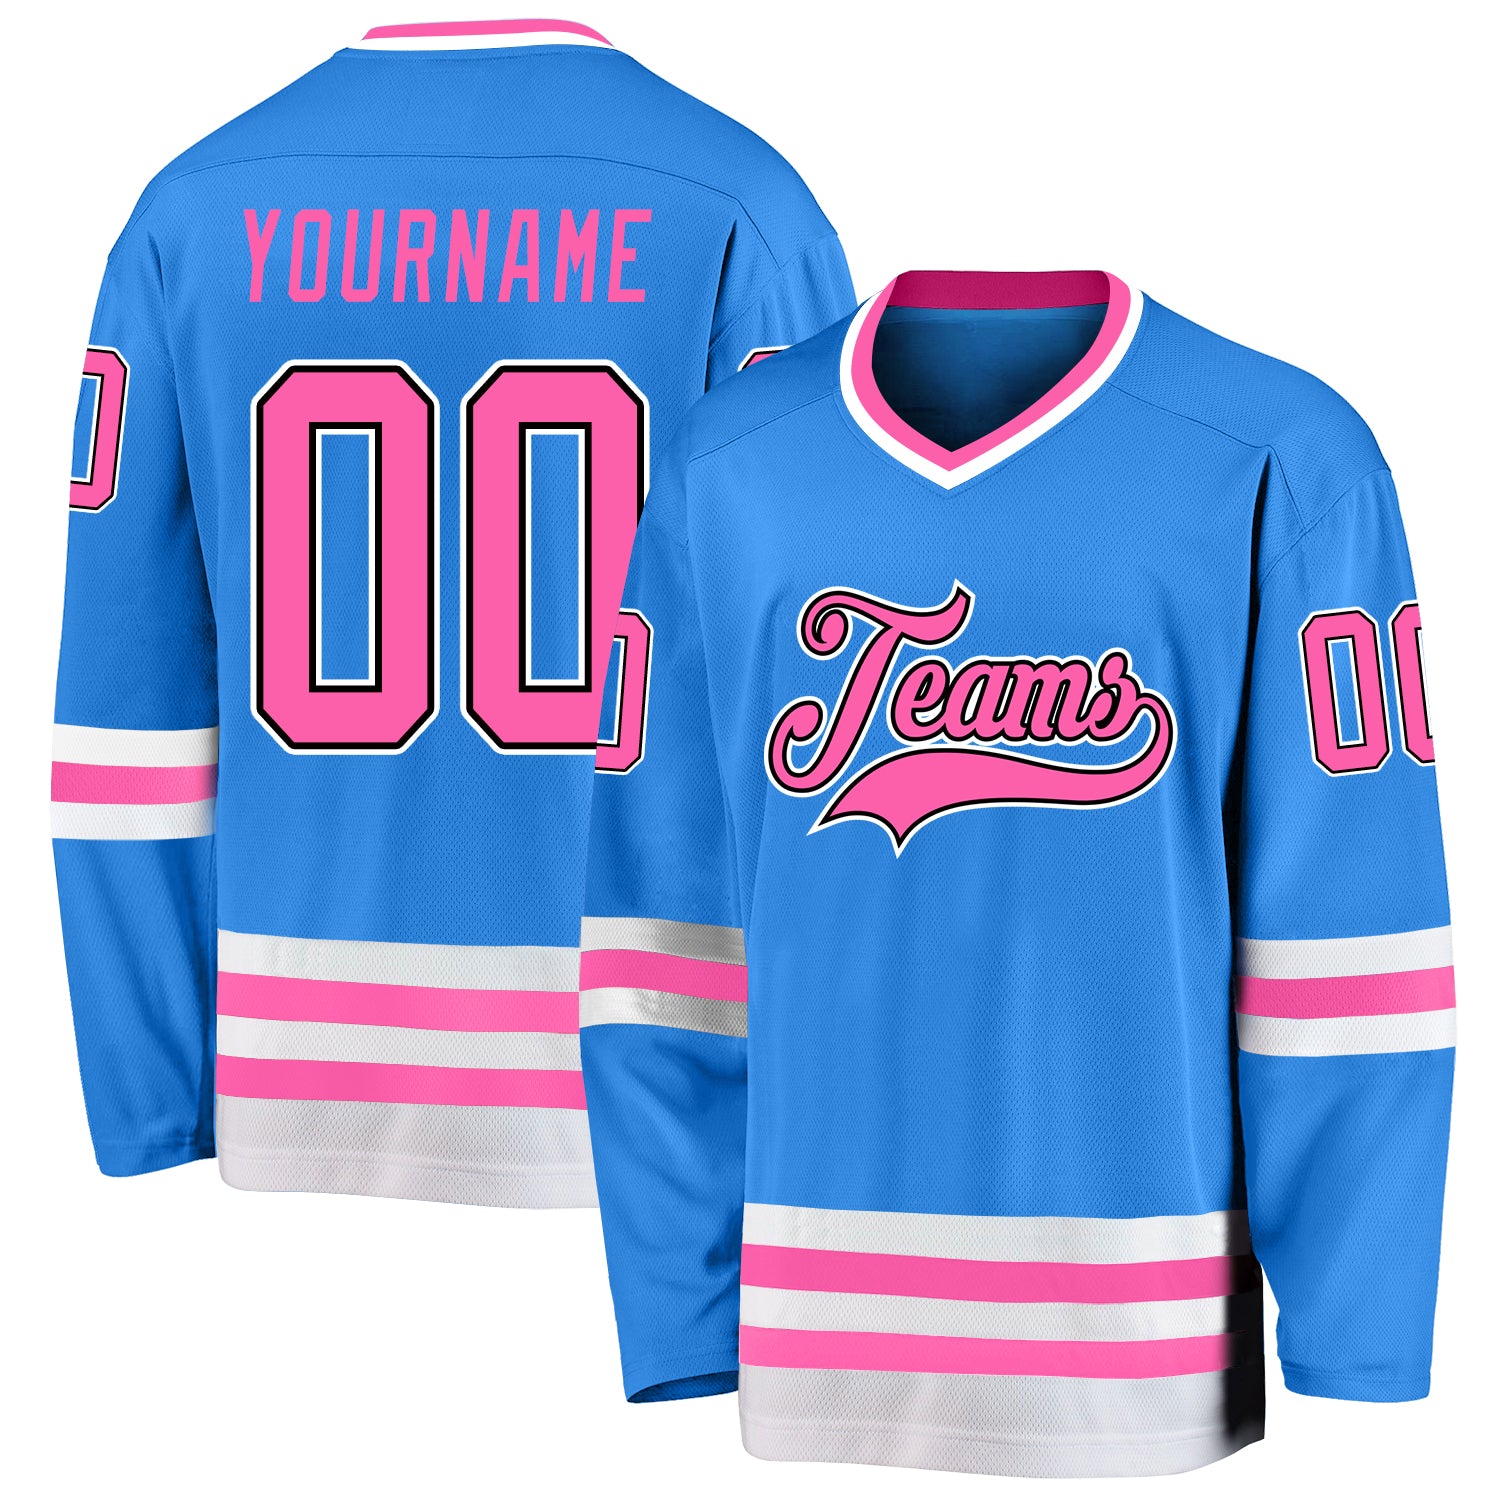 Custom Hockey Jersey Sky Blue Pink-Black Men's Size:2XL